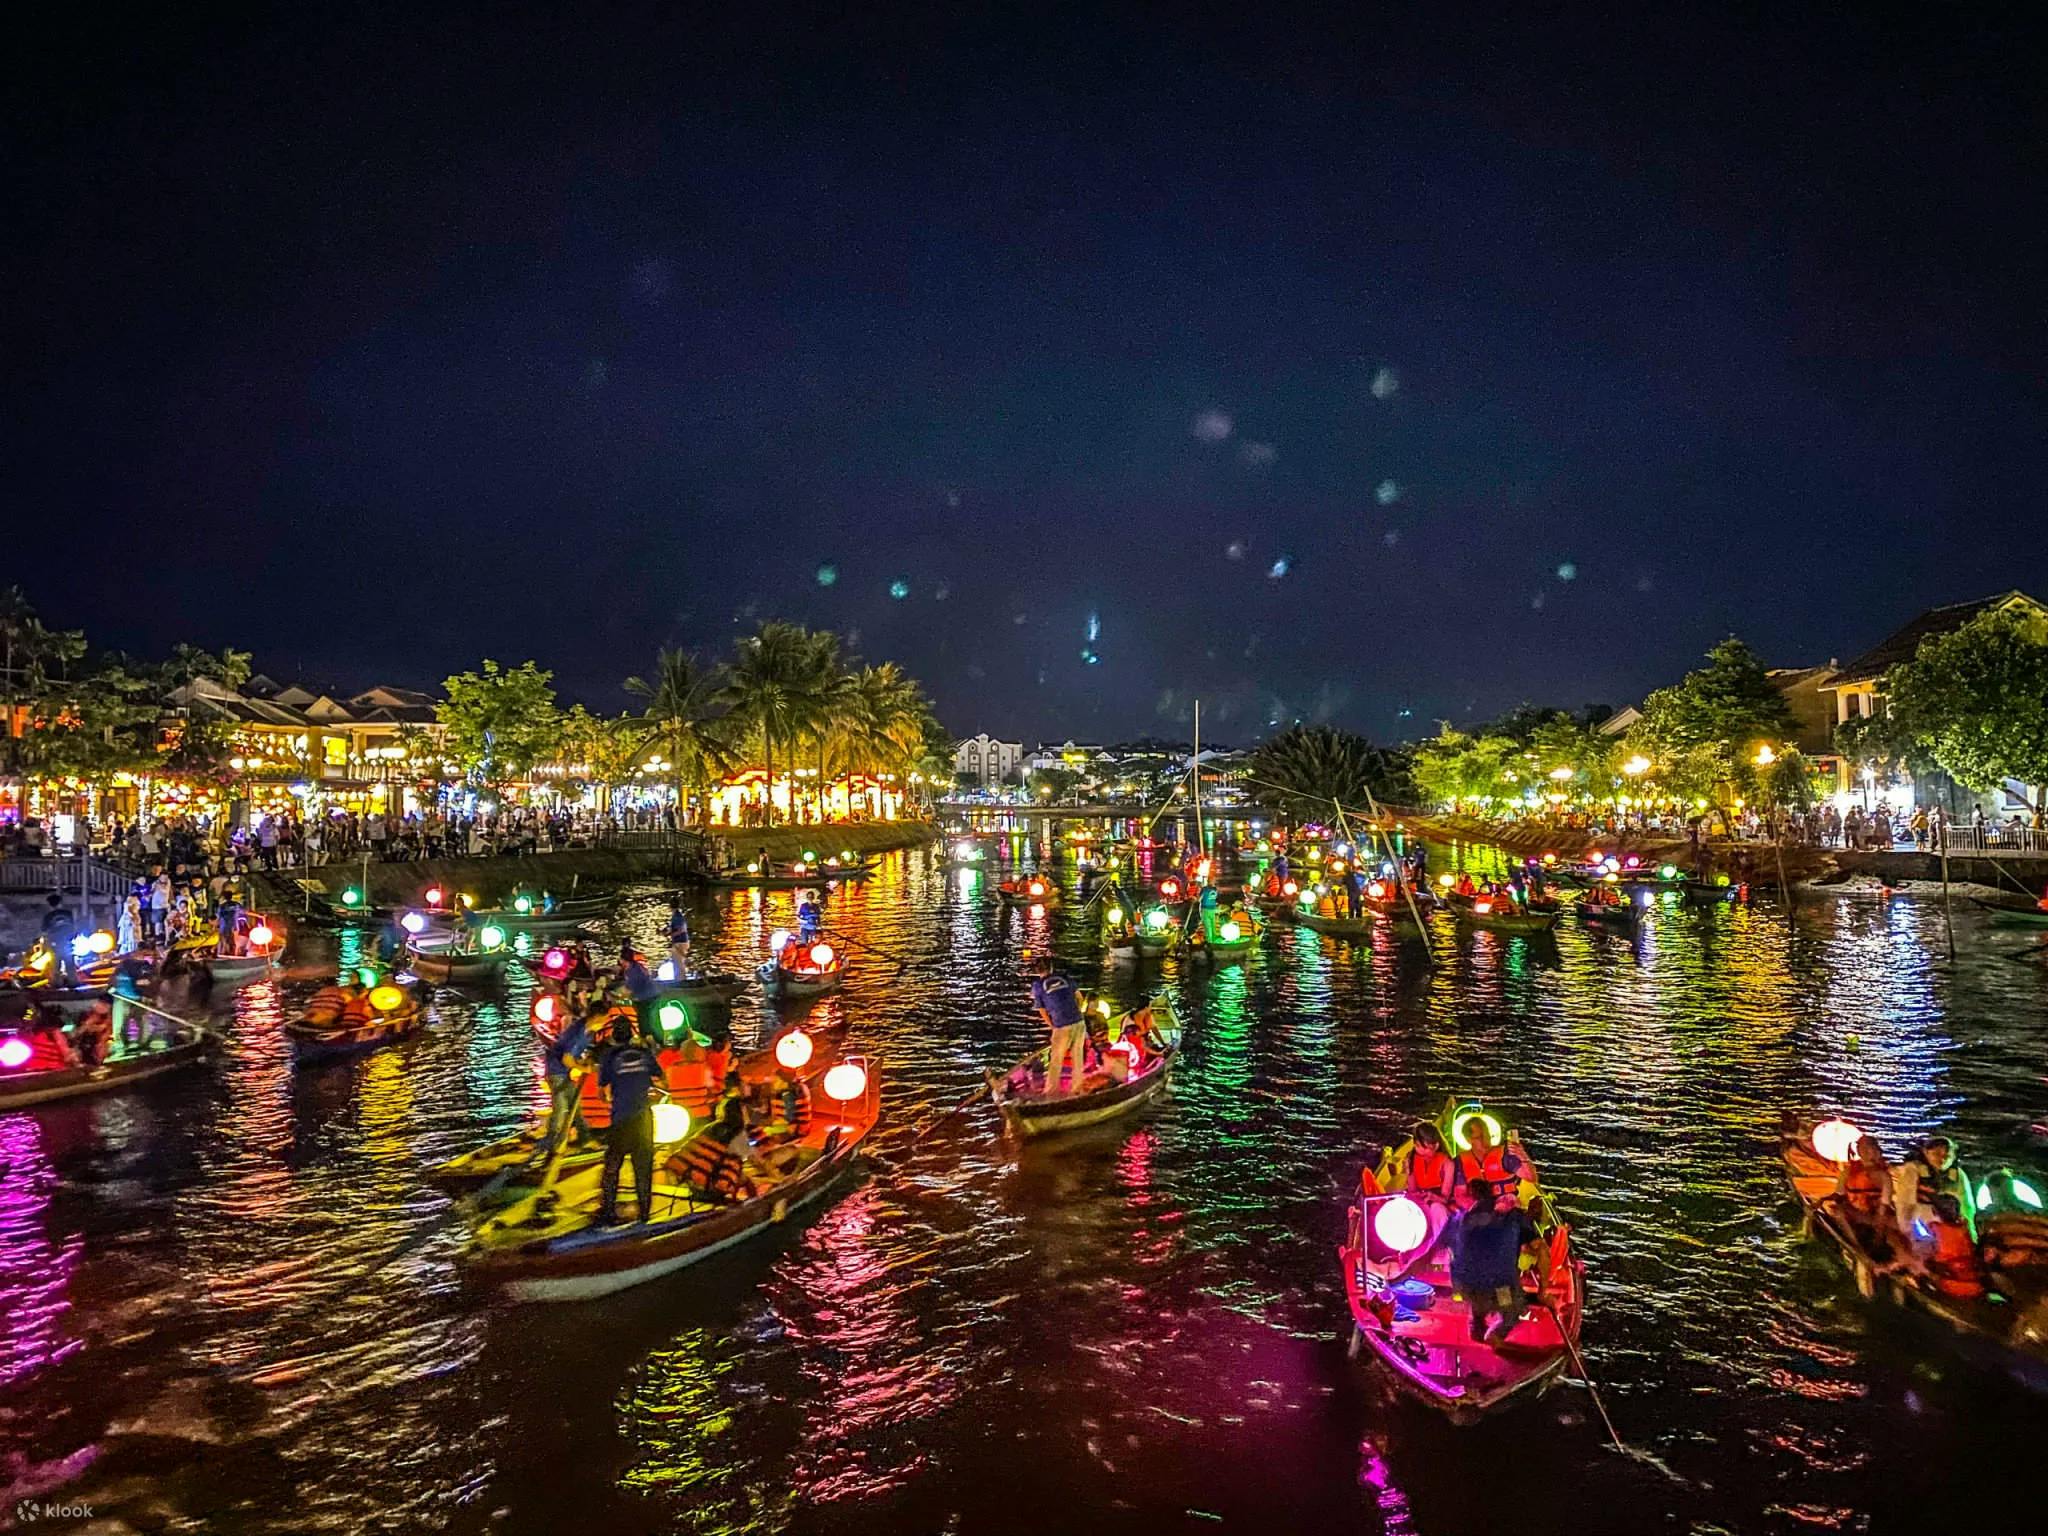 Releasing flower lanterns on Hoai River, Hoi An